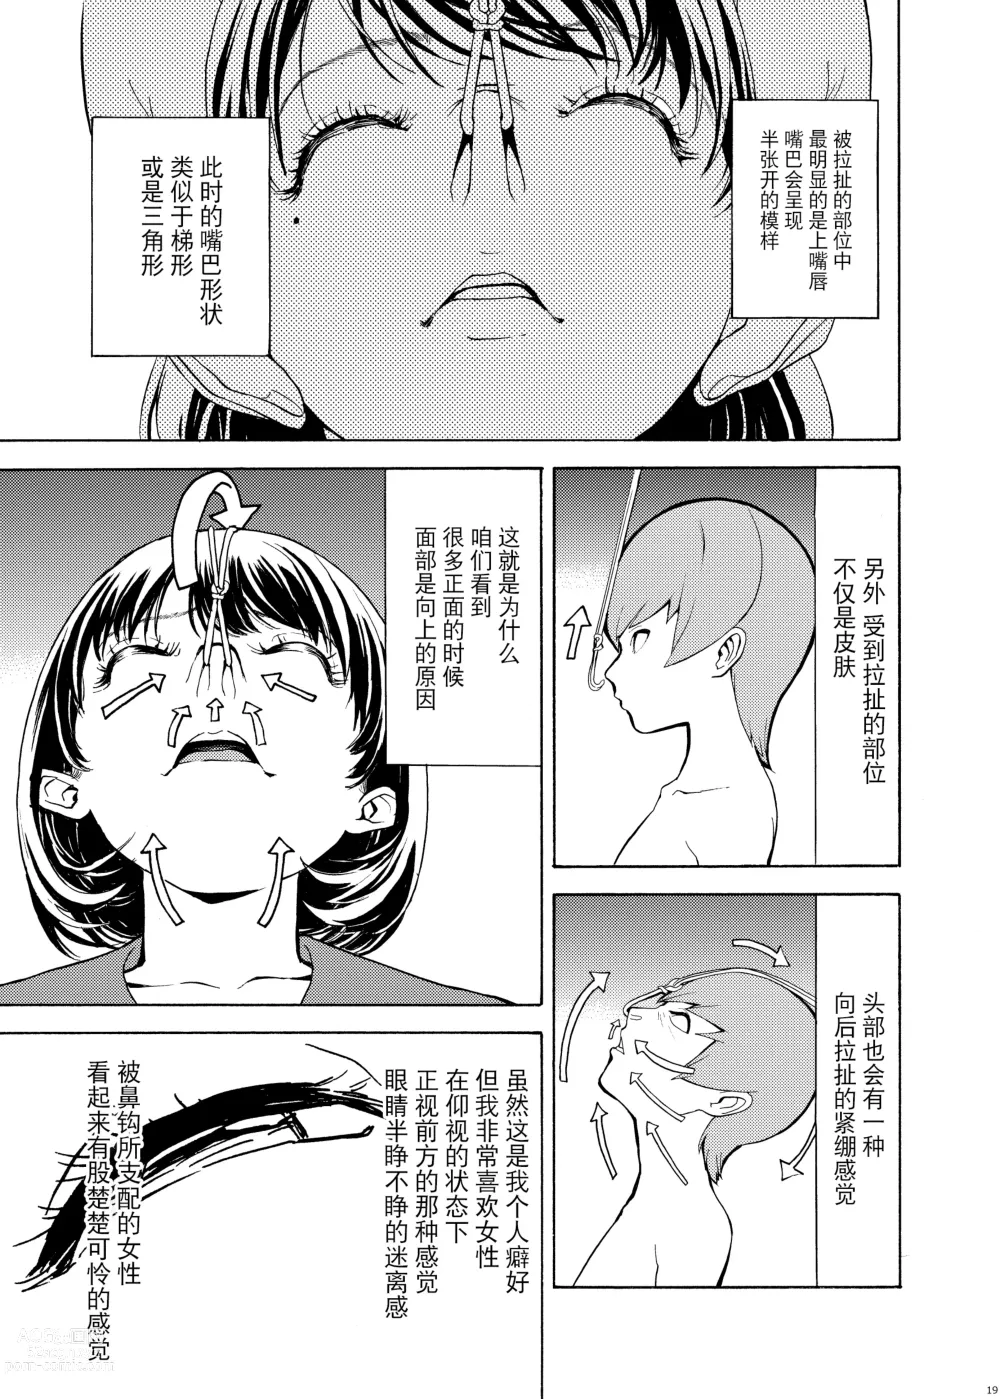 Page 19 of doujinshi Hanazeme Kaozeme no Hon Soushuuhen